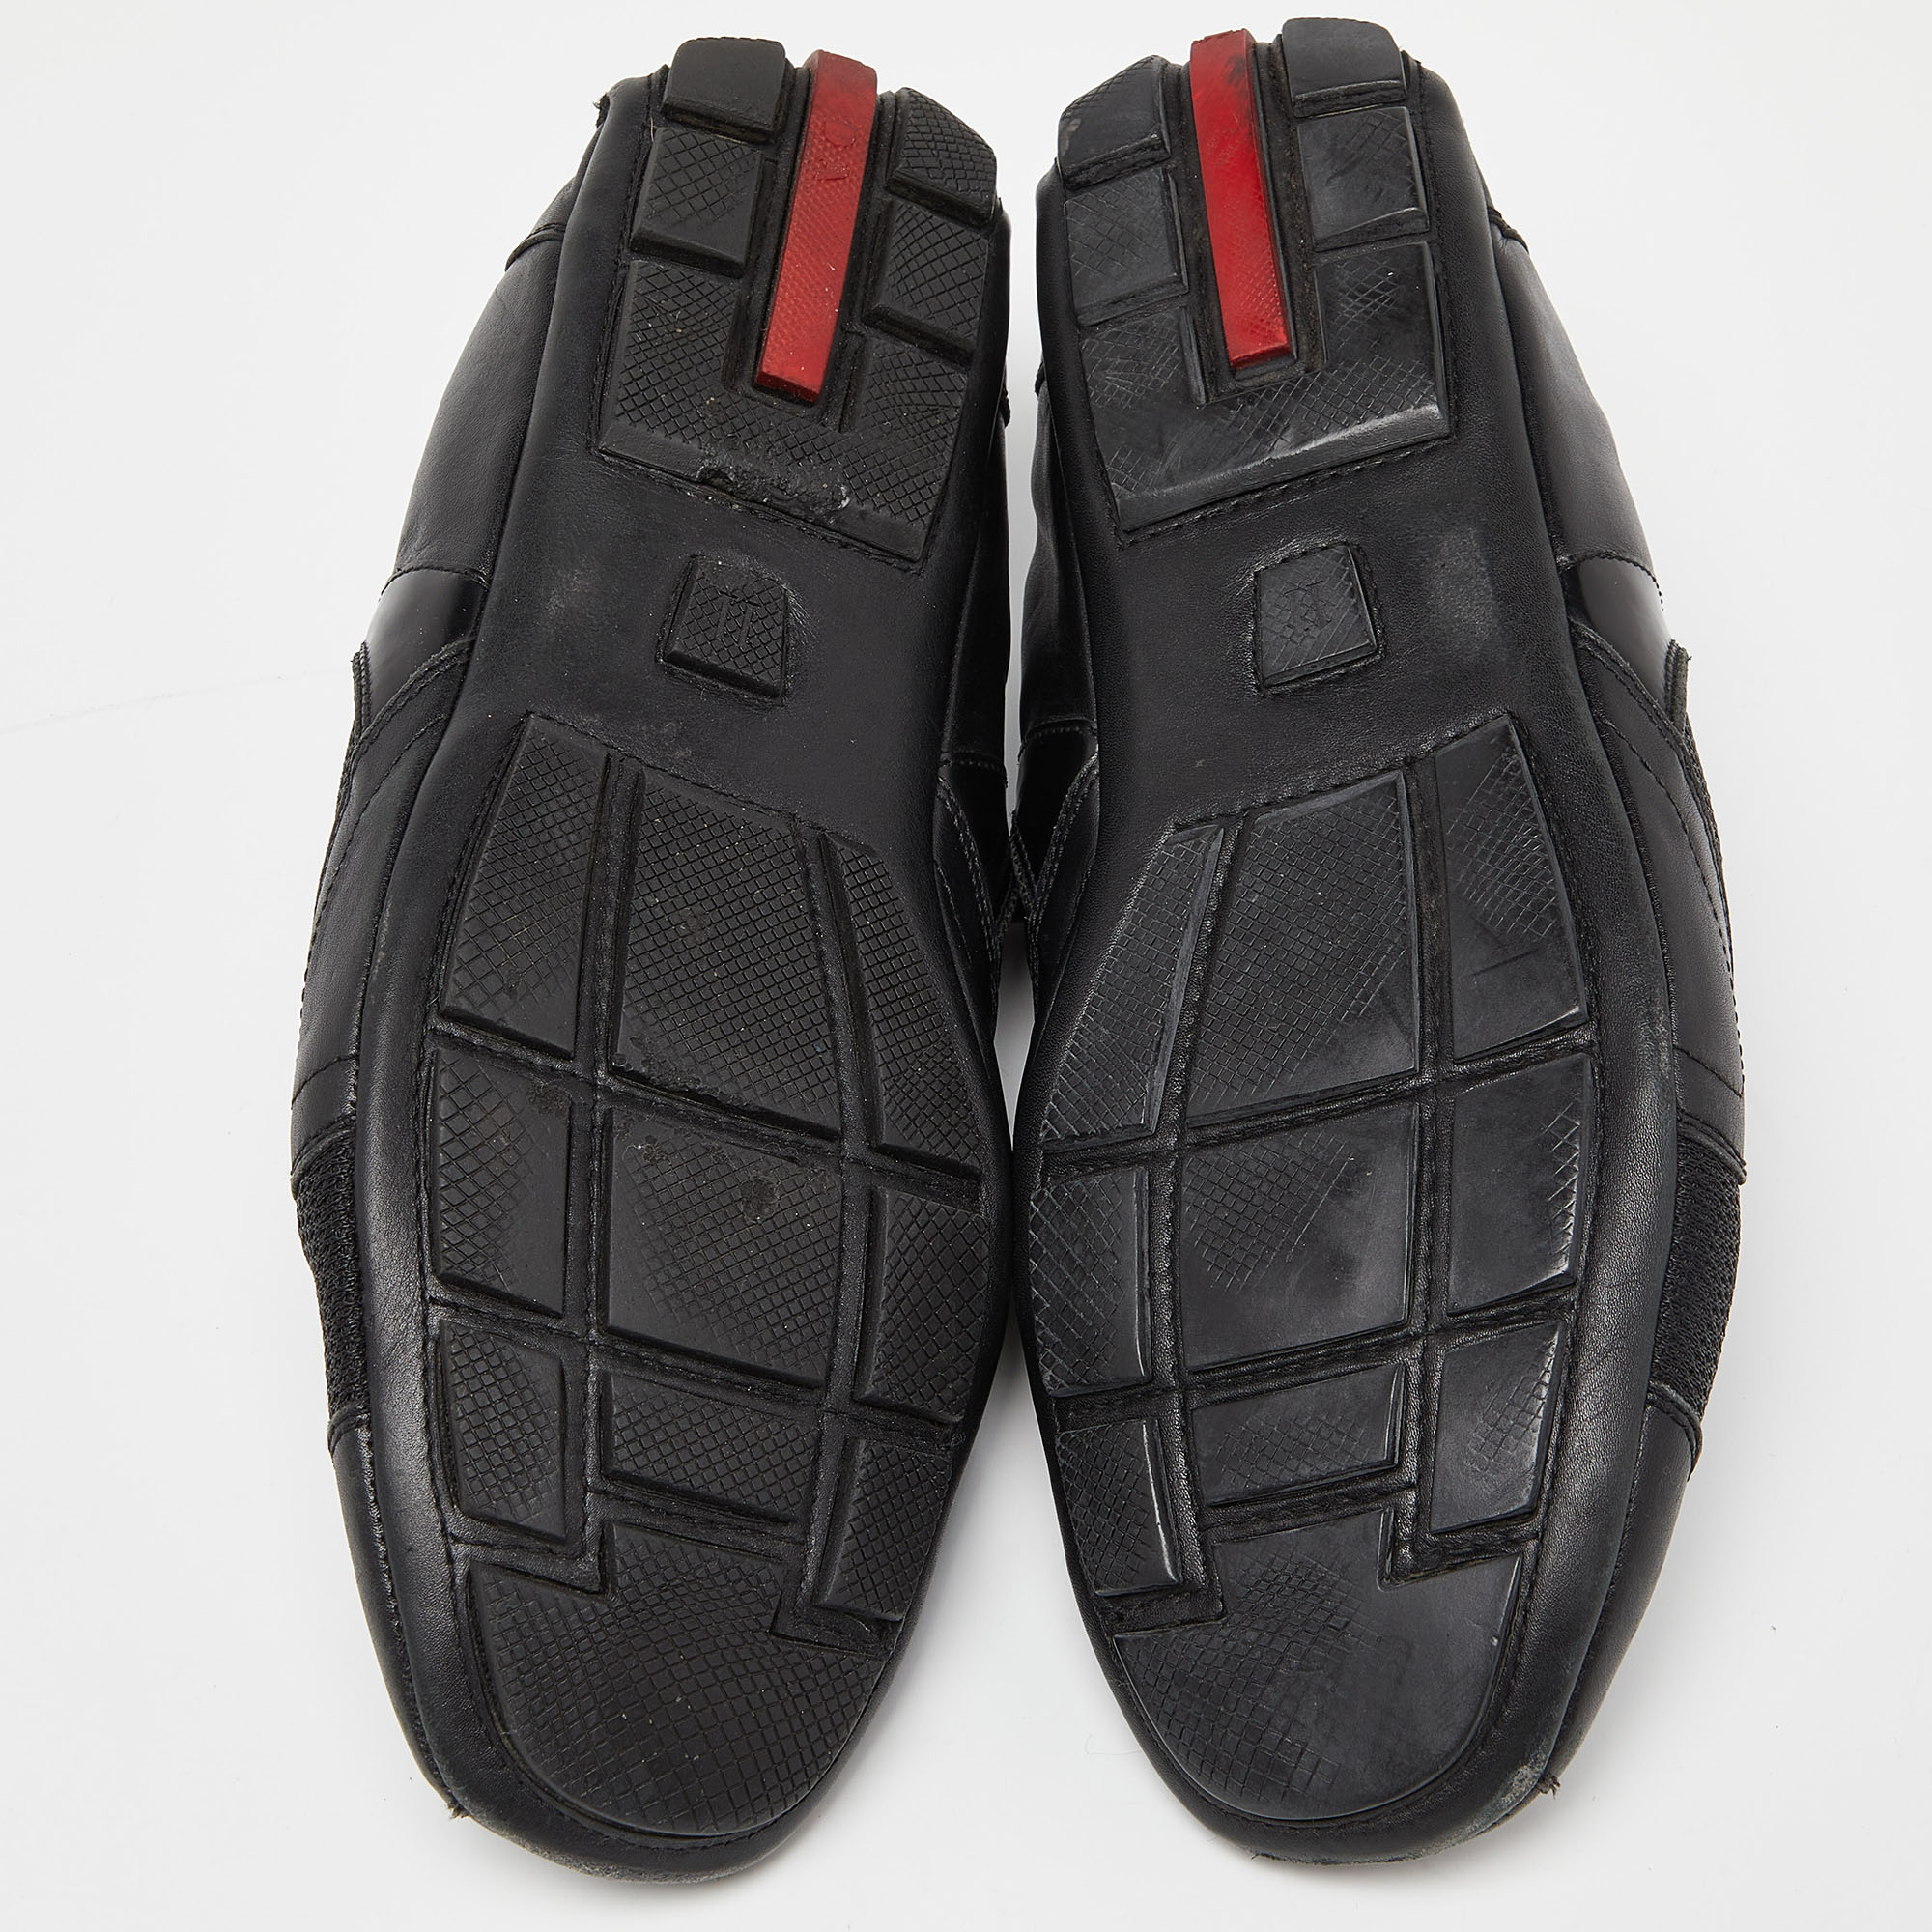 Prada Sport Black Leather Low Top Sneakers Size 45